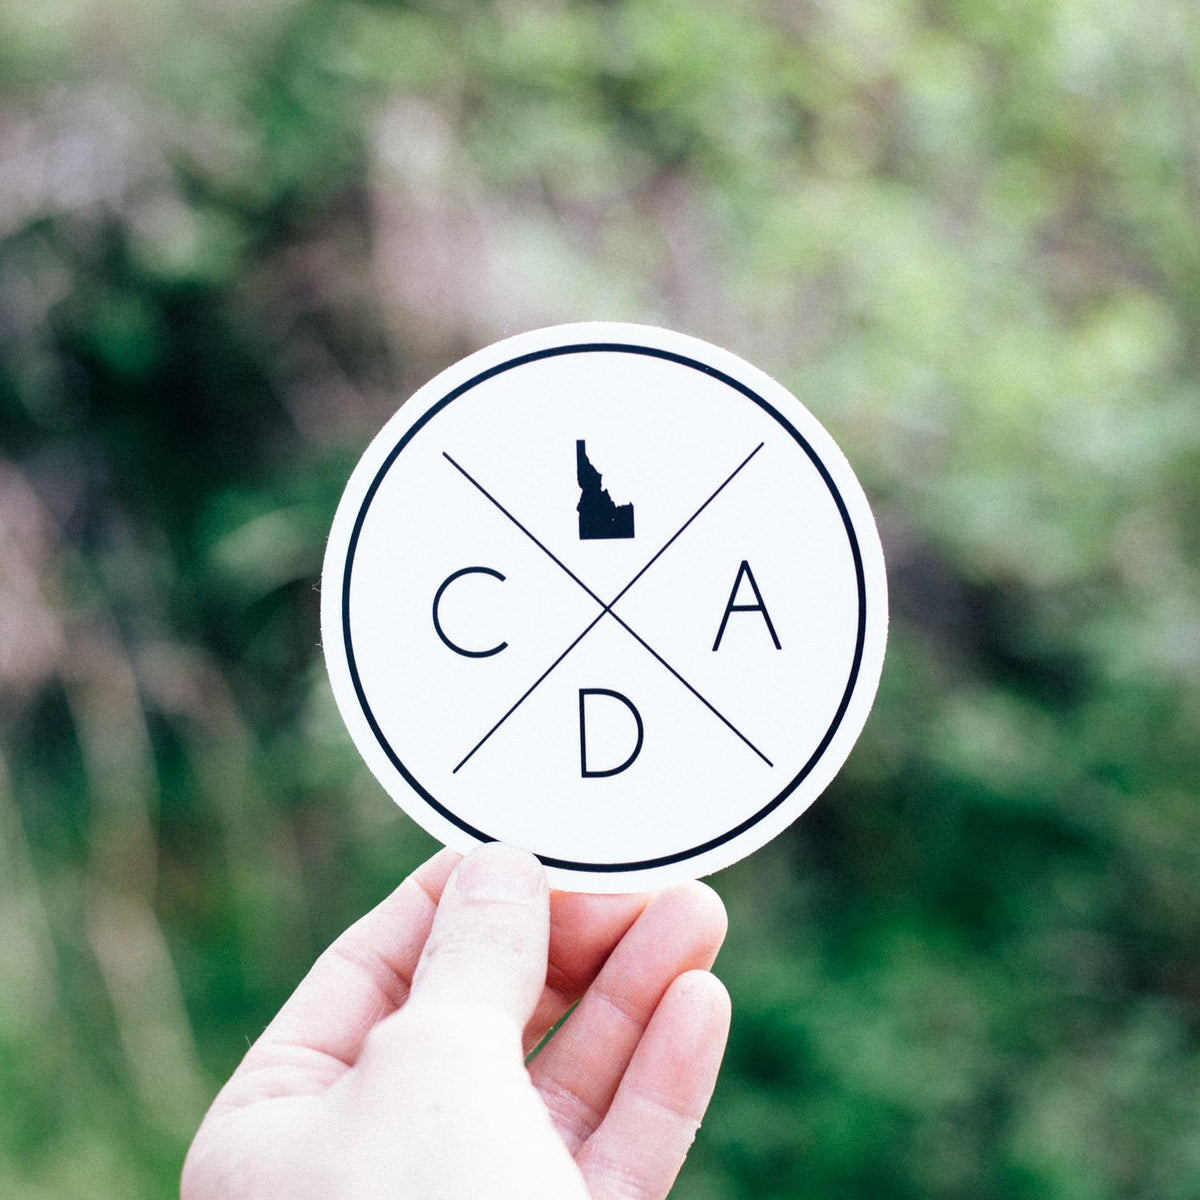 CDA Logo Sticker